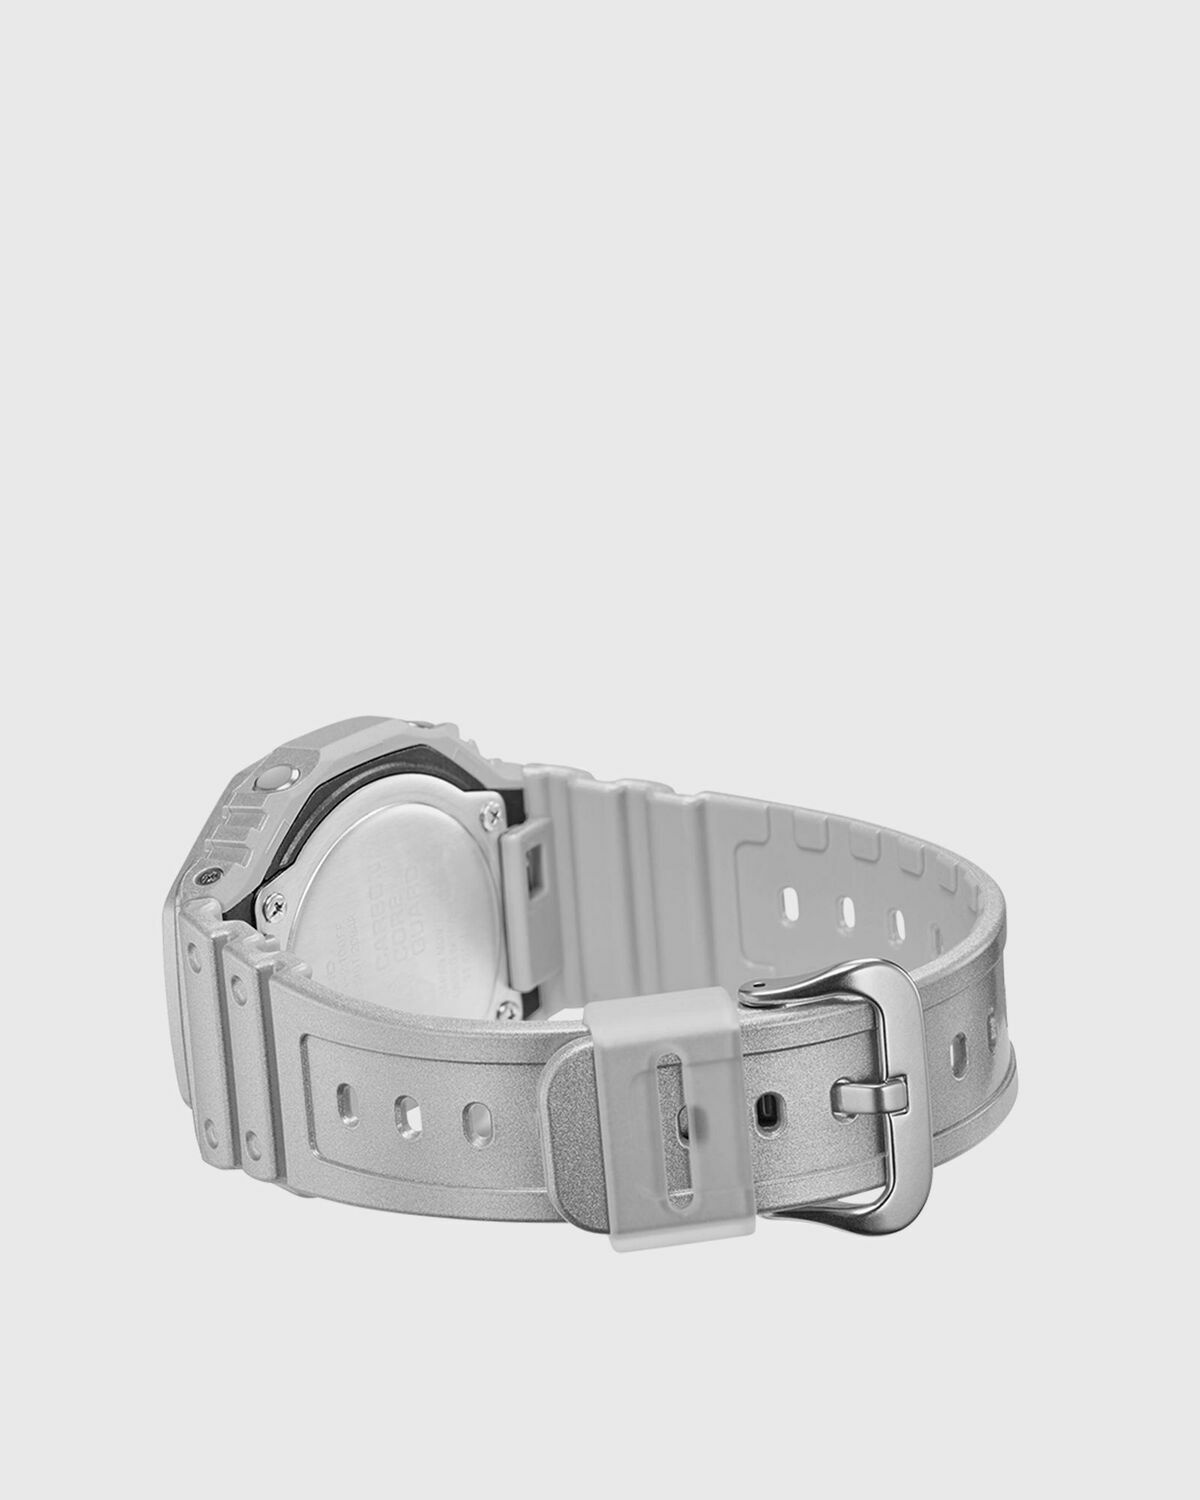 Casio G Shock Ga Silver Ff Aer Watches - 2100 - 8 Casio Mens